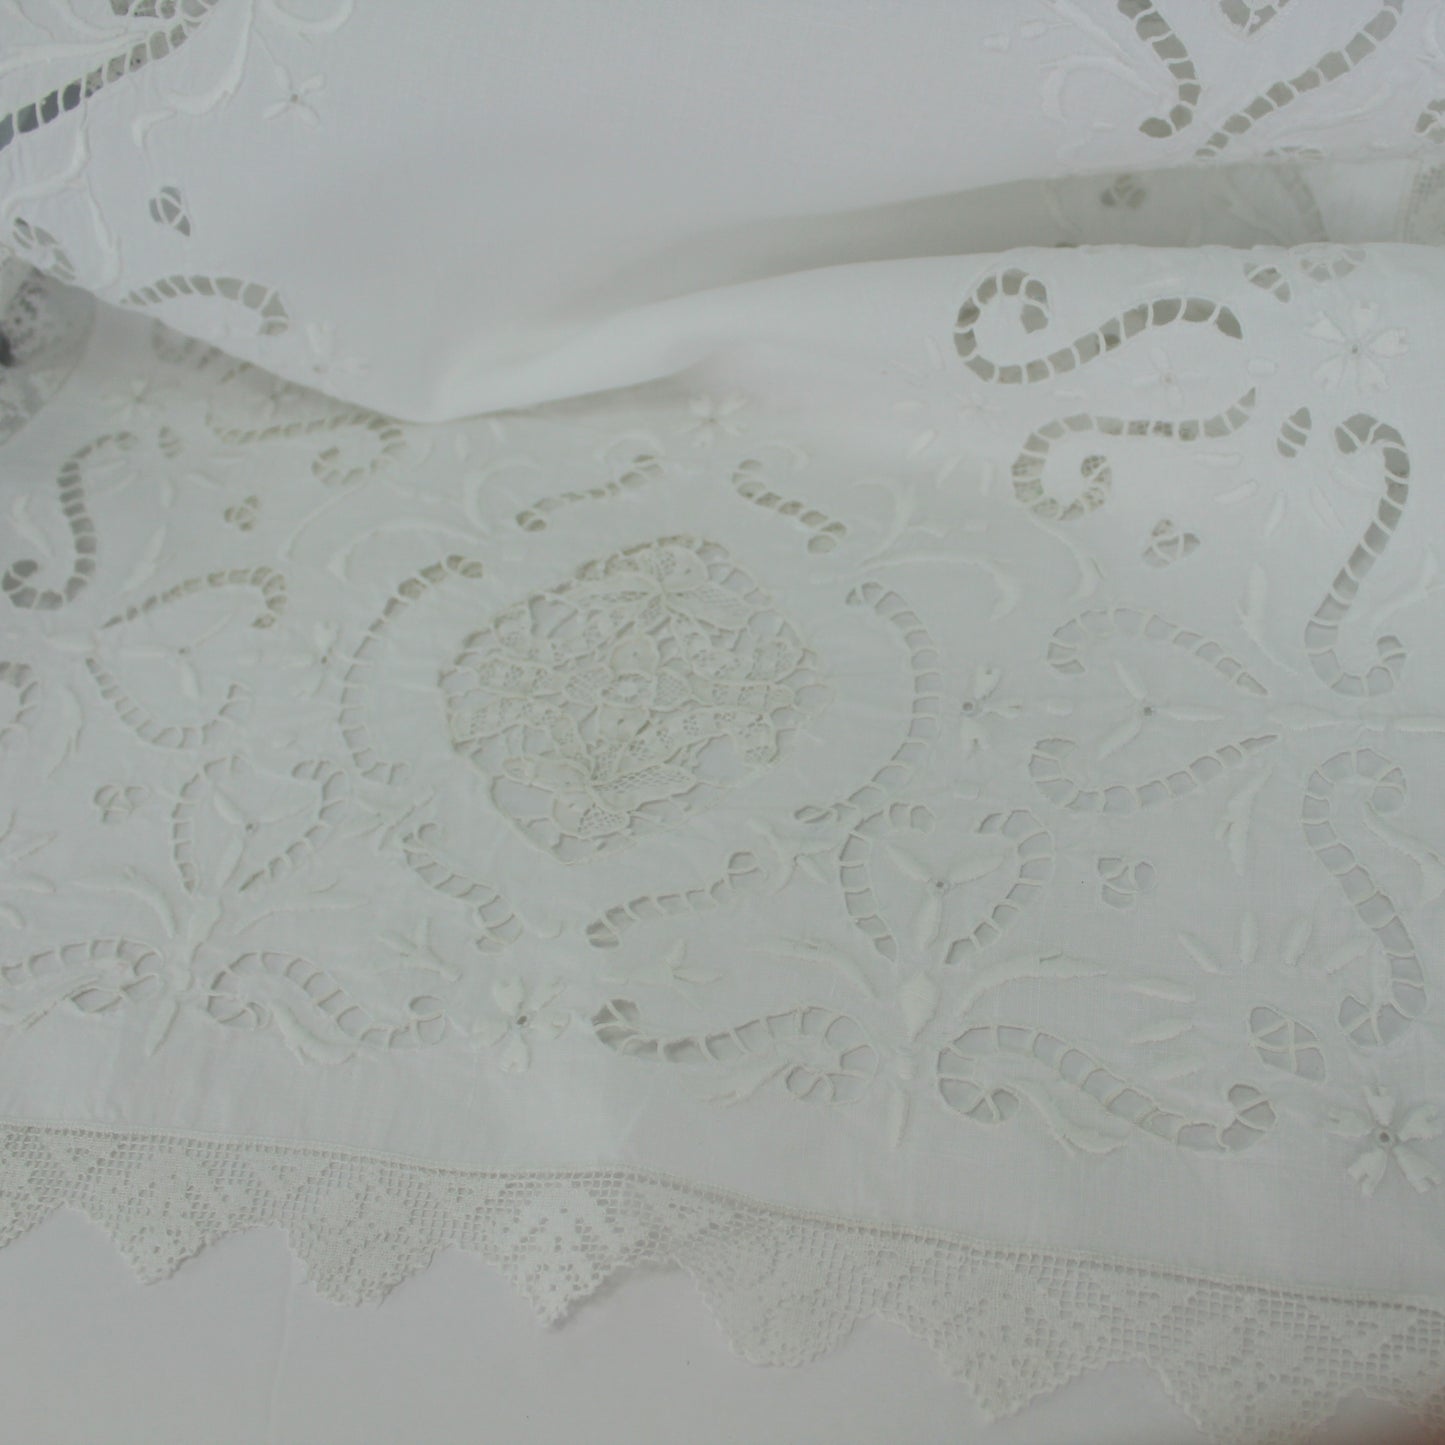 Elegant Madeira Style Linen Table Center Runner Lace Edging White on White closeup of hand work